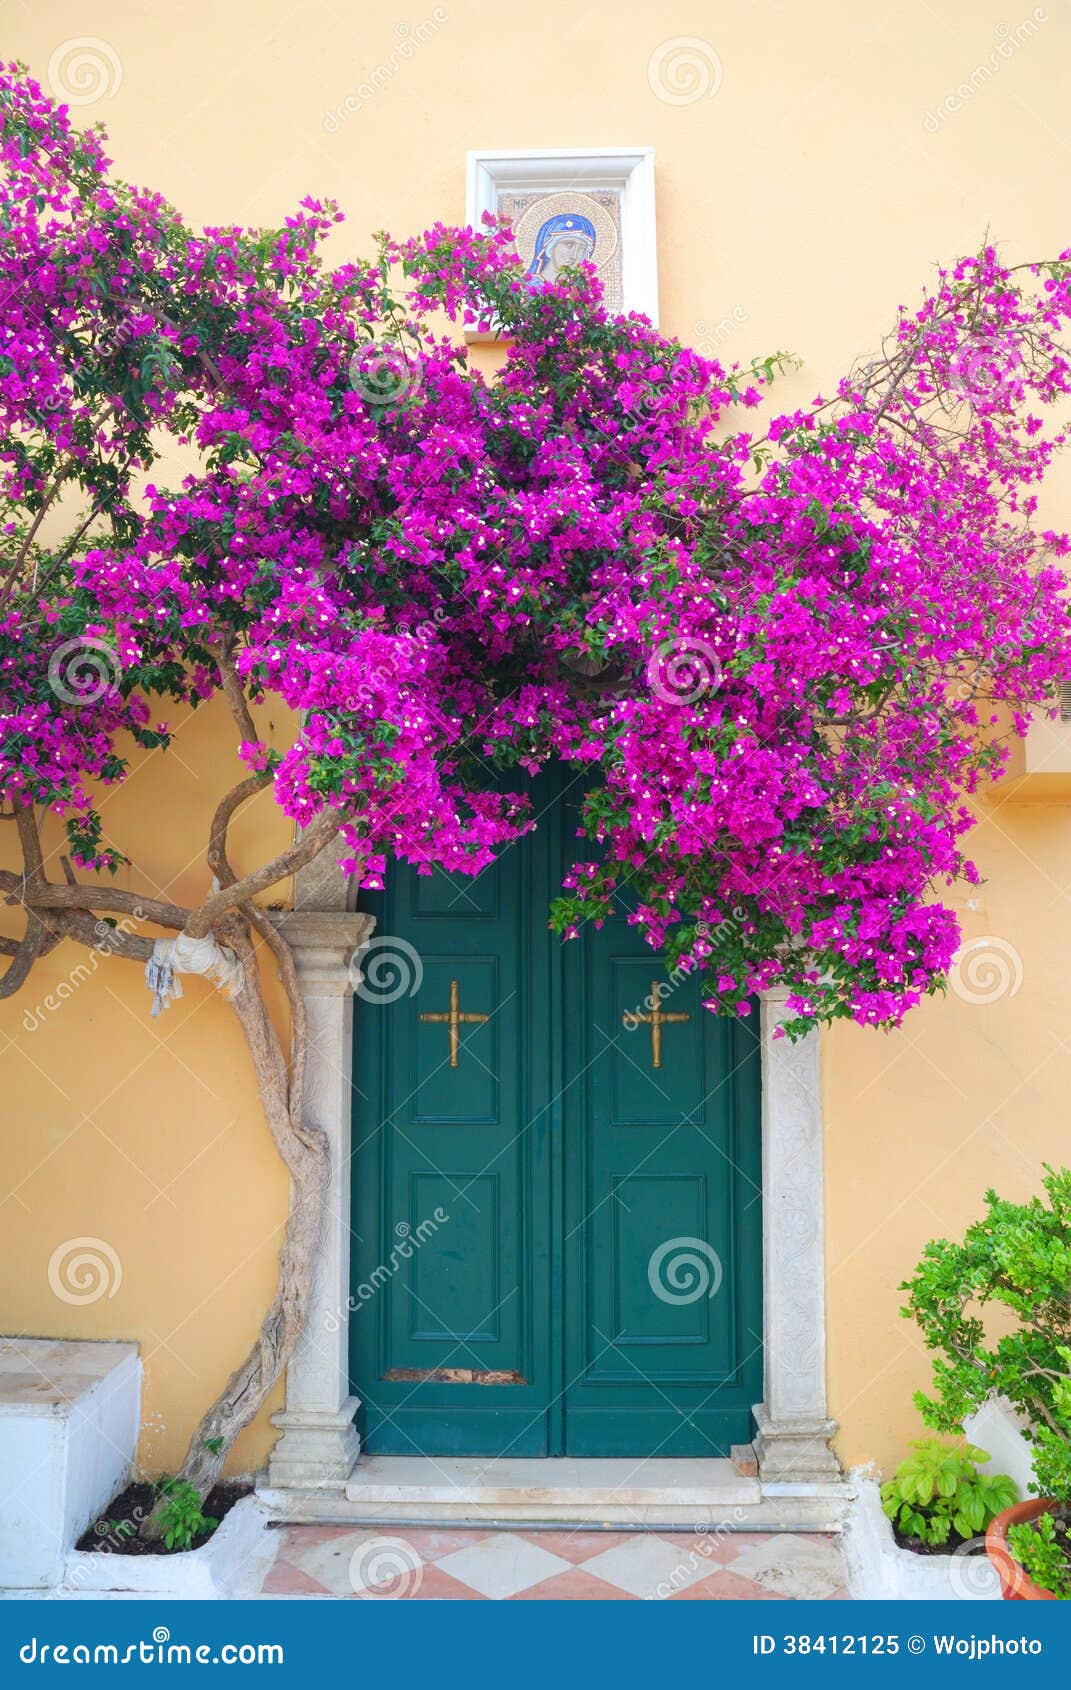 Greek Monastery Door with Flowers Stock Image - Image of decorated ...